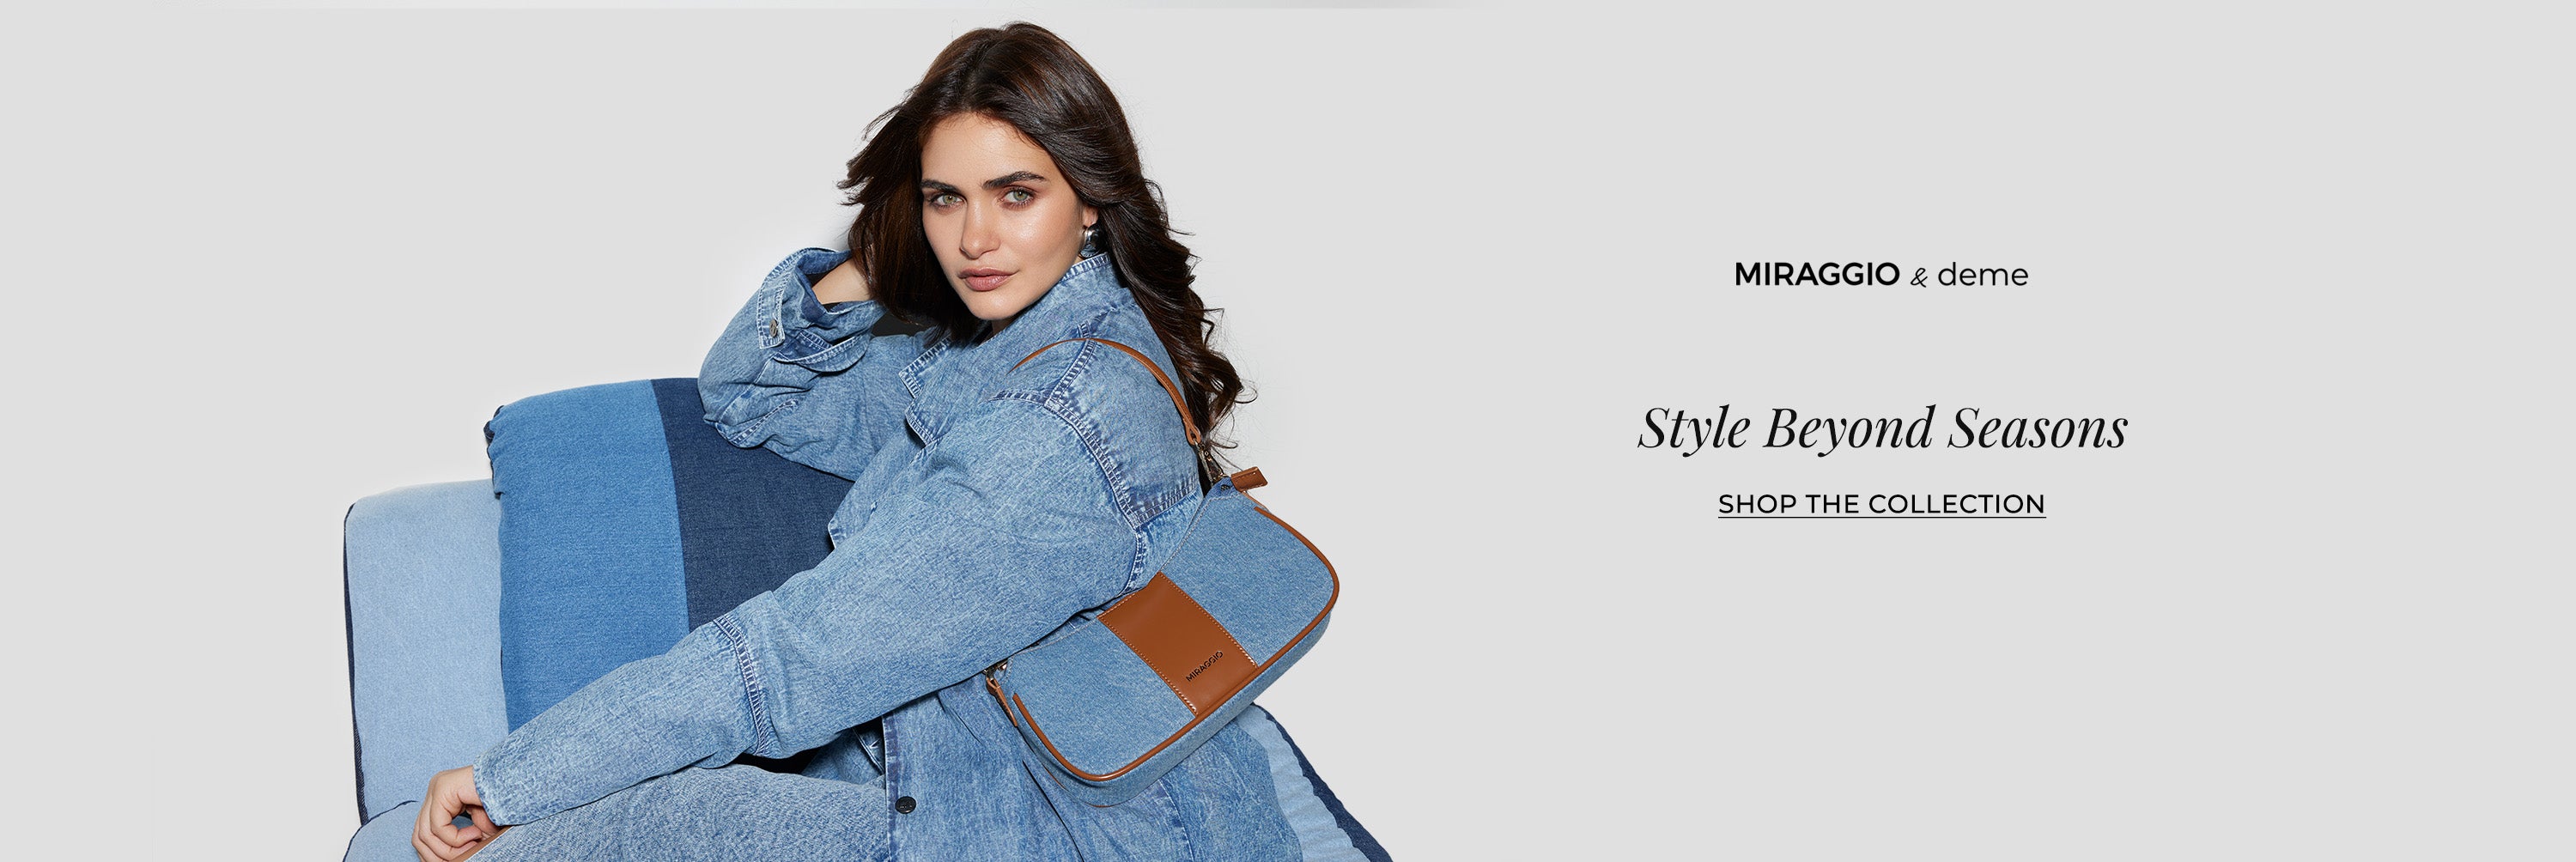 Zara Brand Designer Bags Combo set 5 in 1 at Rs 3000/set | Branded Bags in  Pune | ID: 14225999591